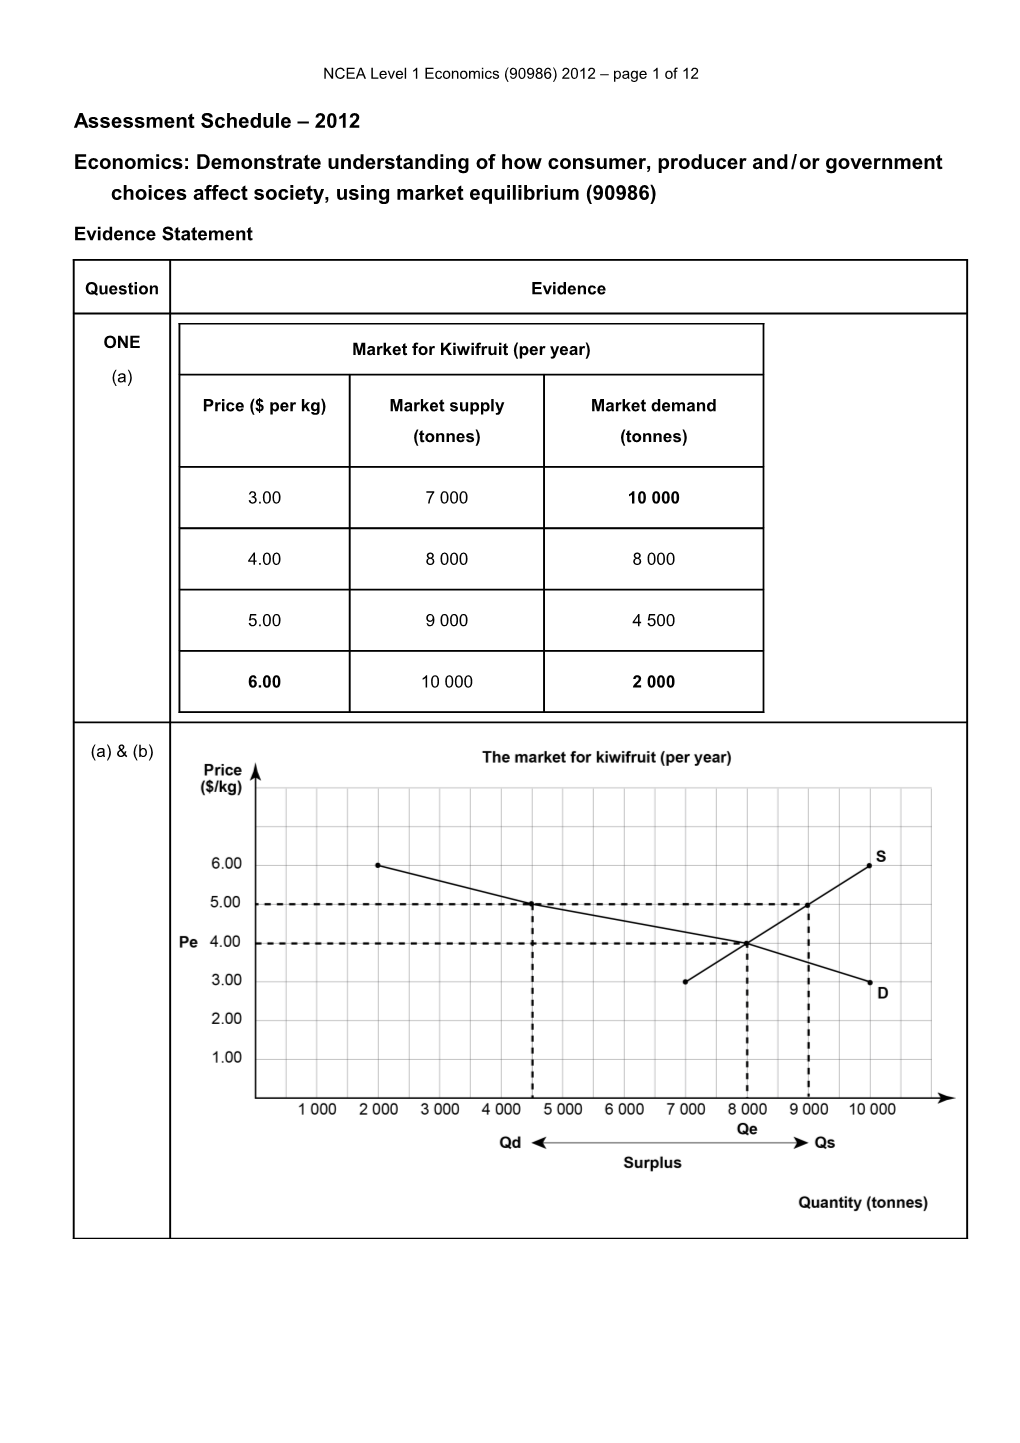 NCEA Level 1 Economics (90986) 2012 Assessment Schedule